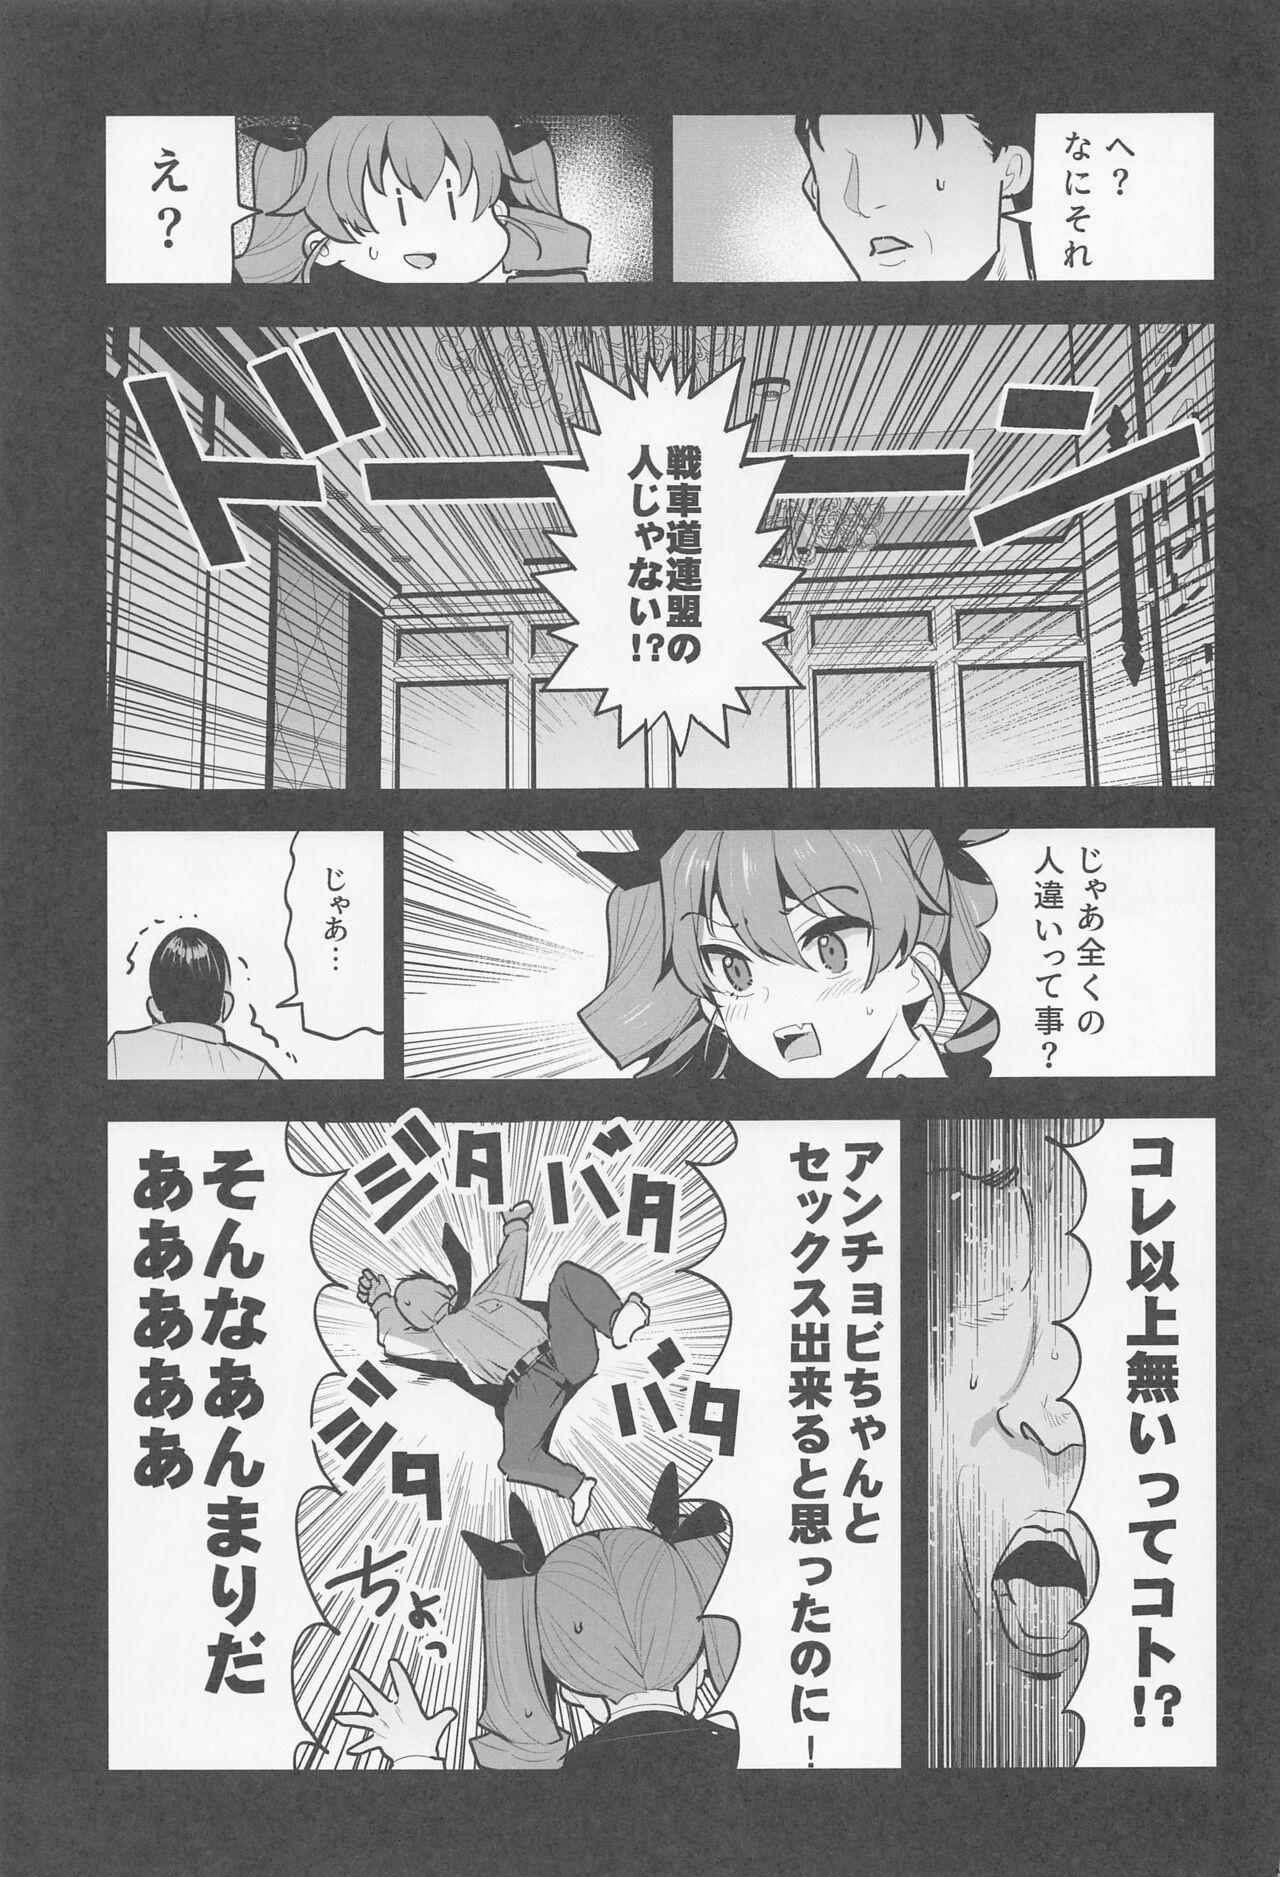 Play anchobi dogezadeonegaishitaraippatsuyarasetekuremashita - Girls und panzer Soft - Page 10